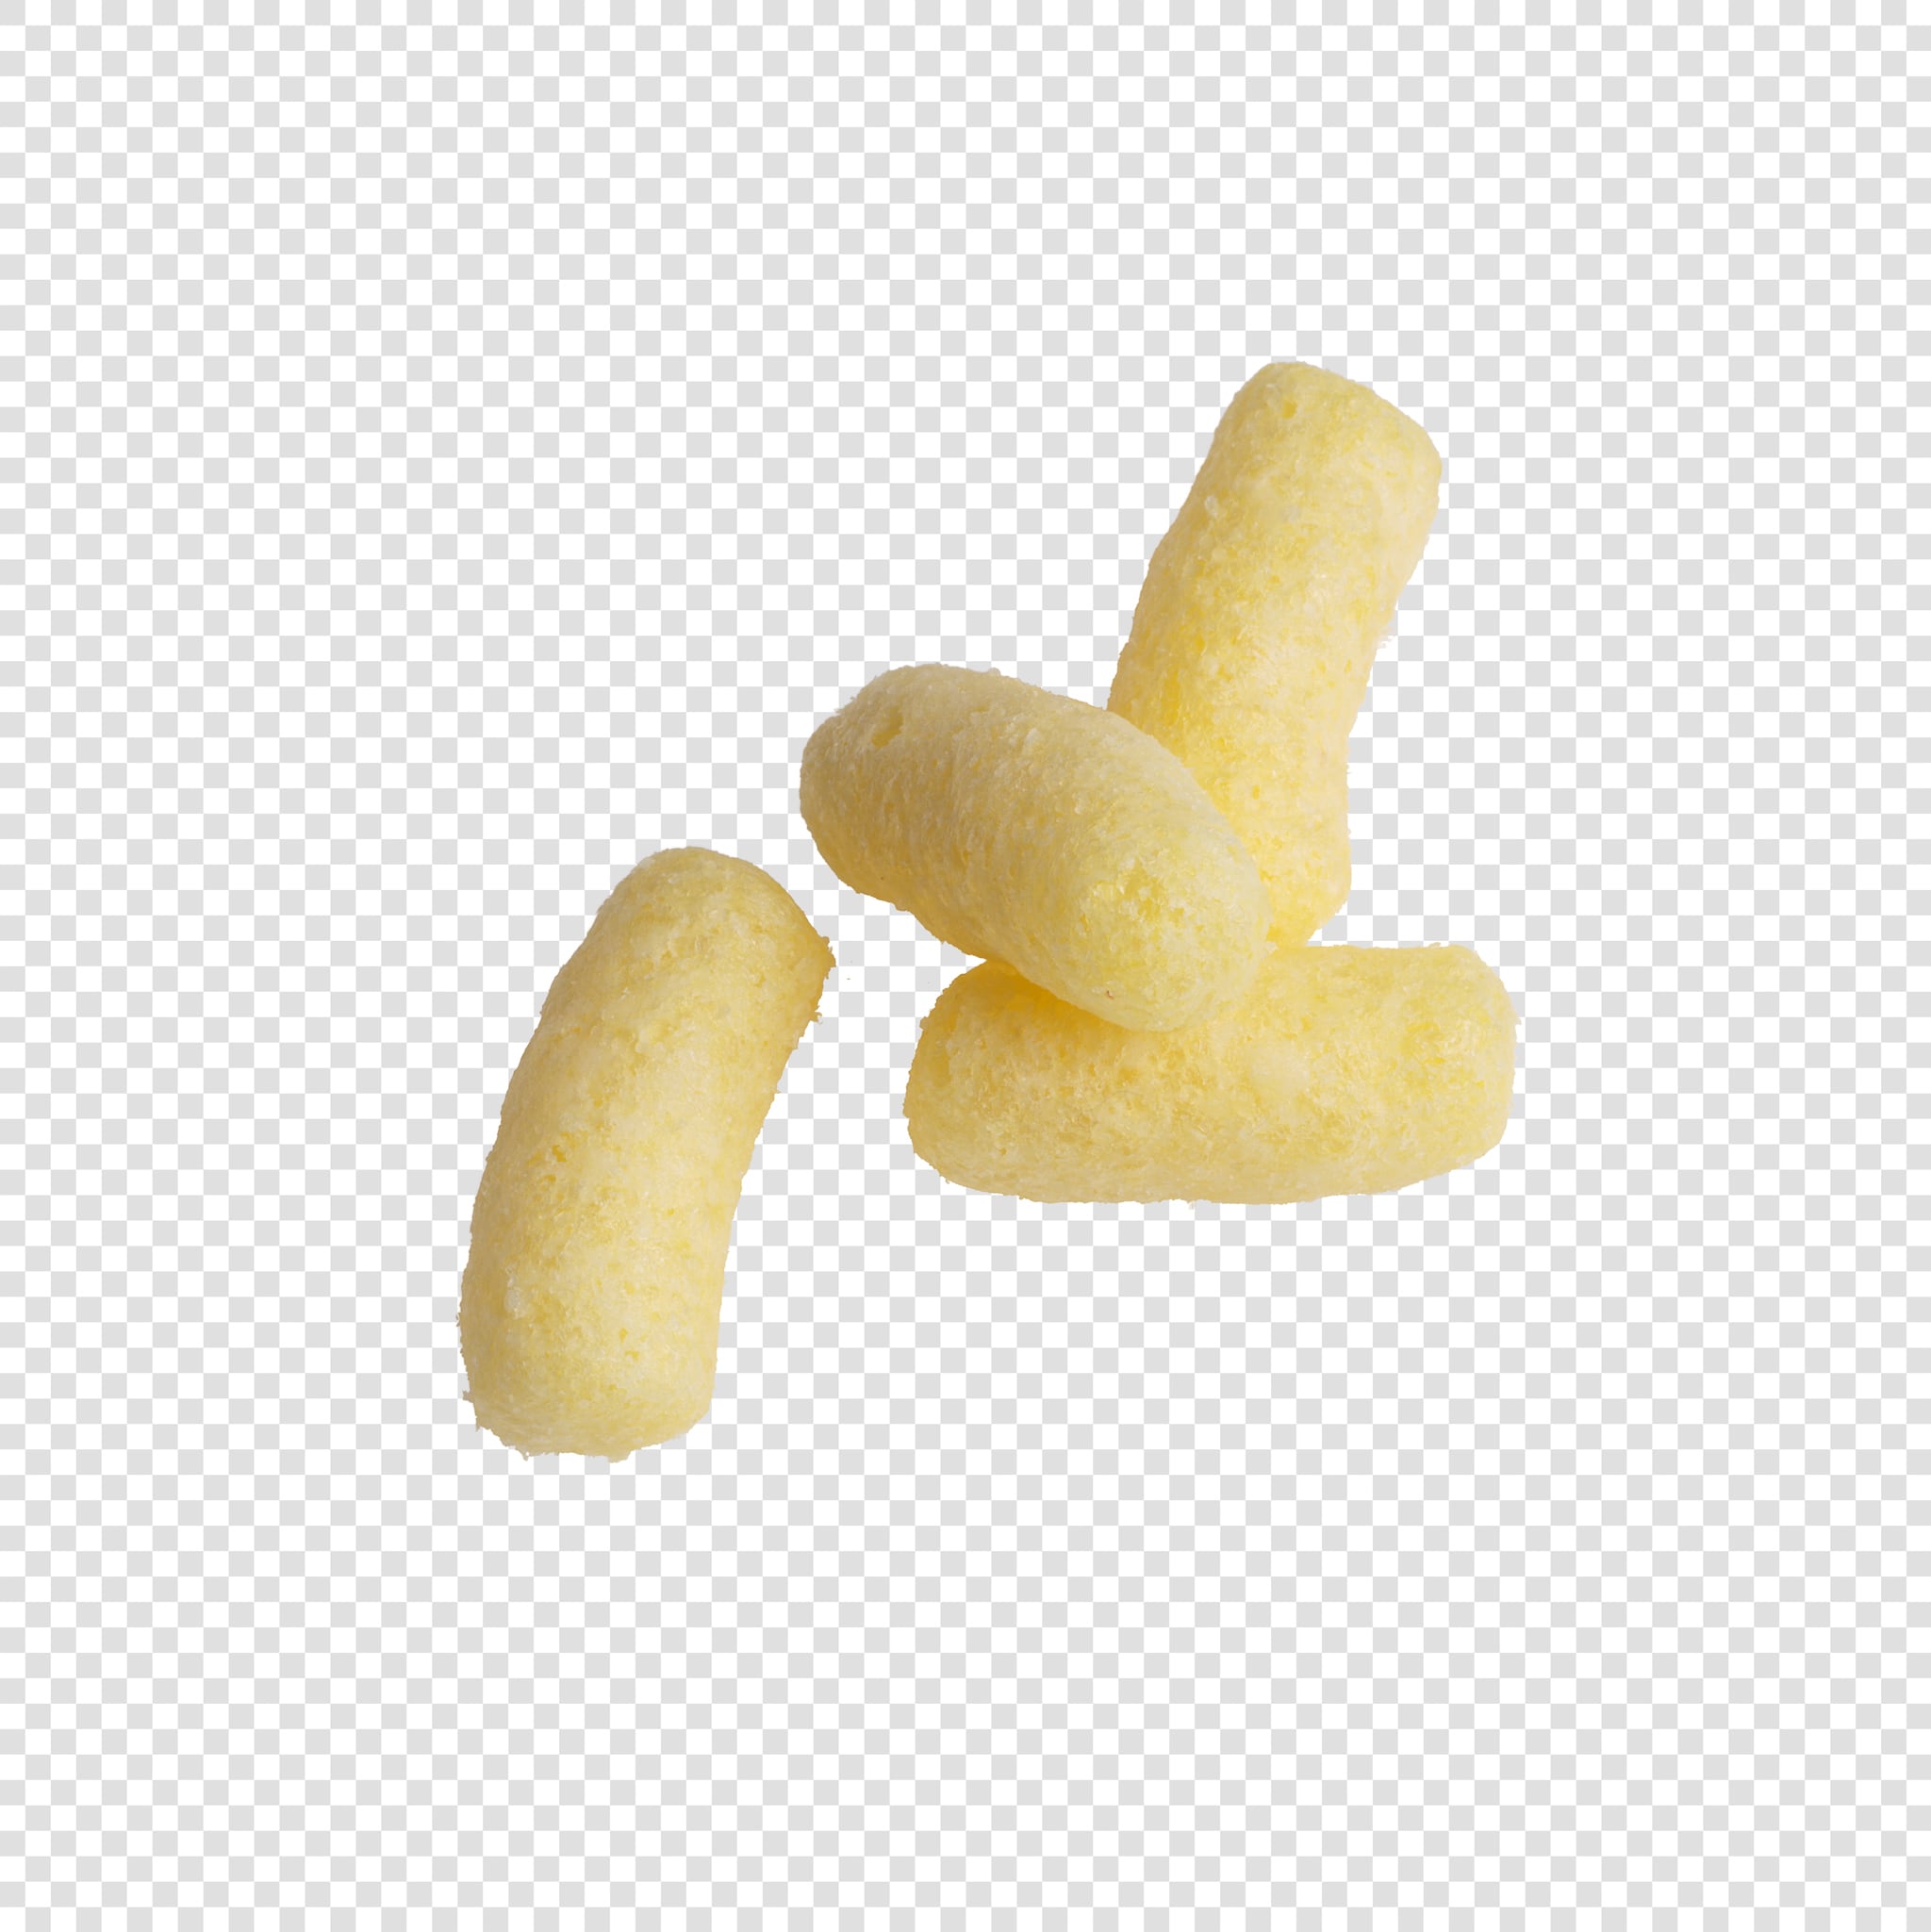 Corn sticks PSD layered image